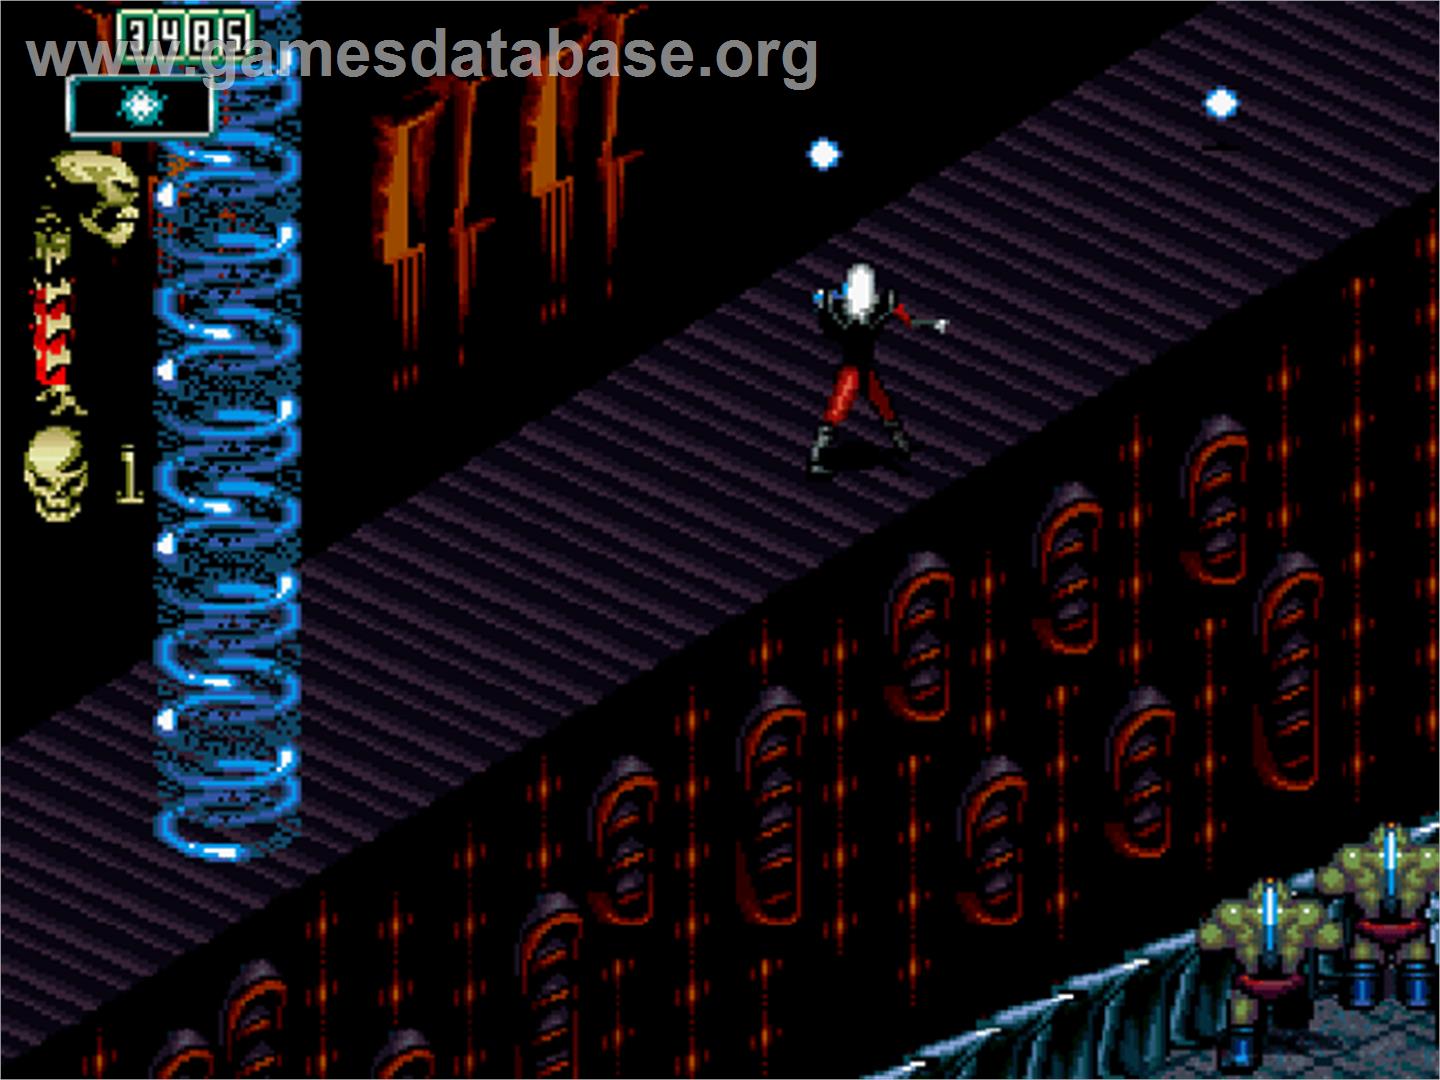 Skeleton Krew - Commodore Amiga CD32 - Artwork - In Game